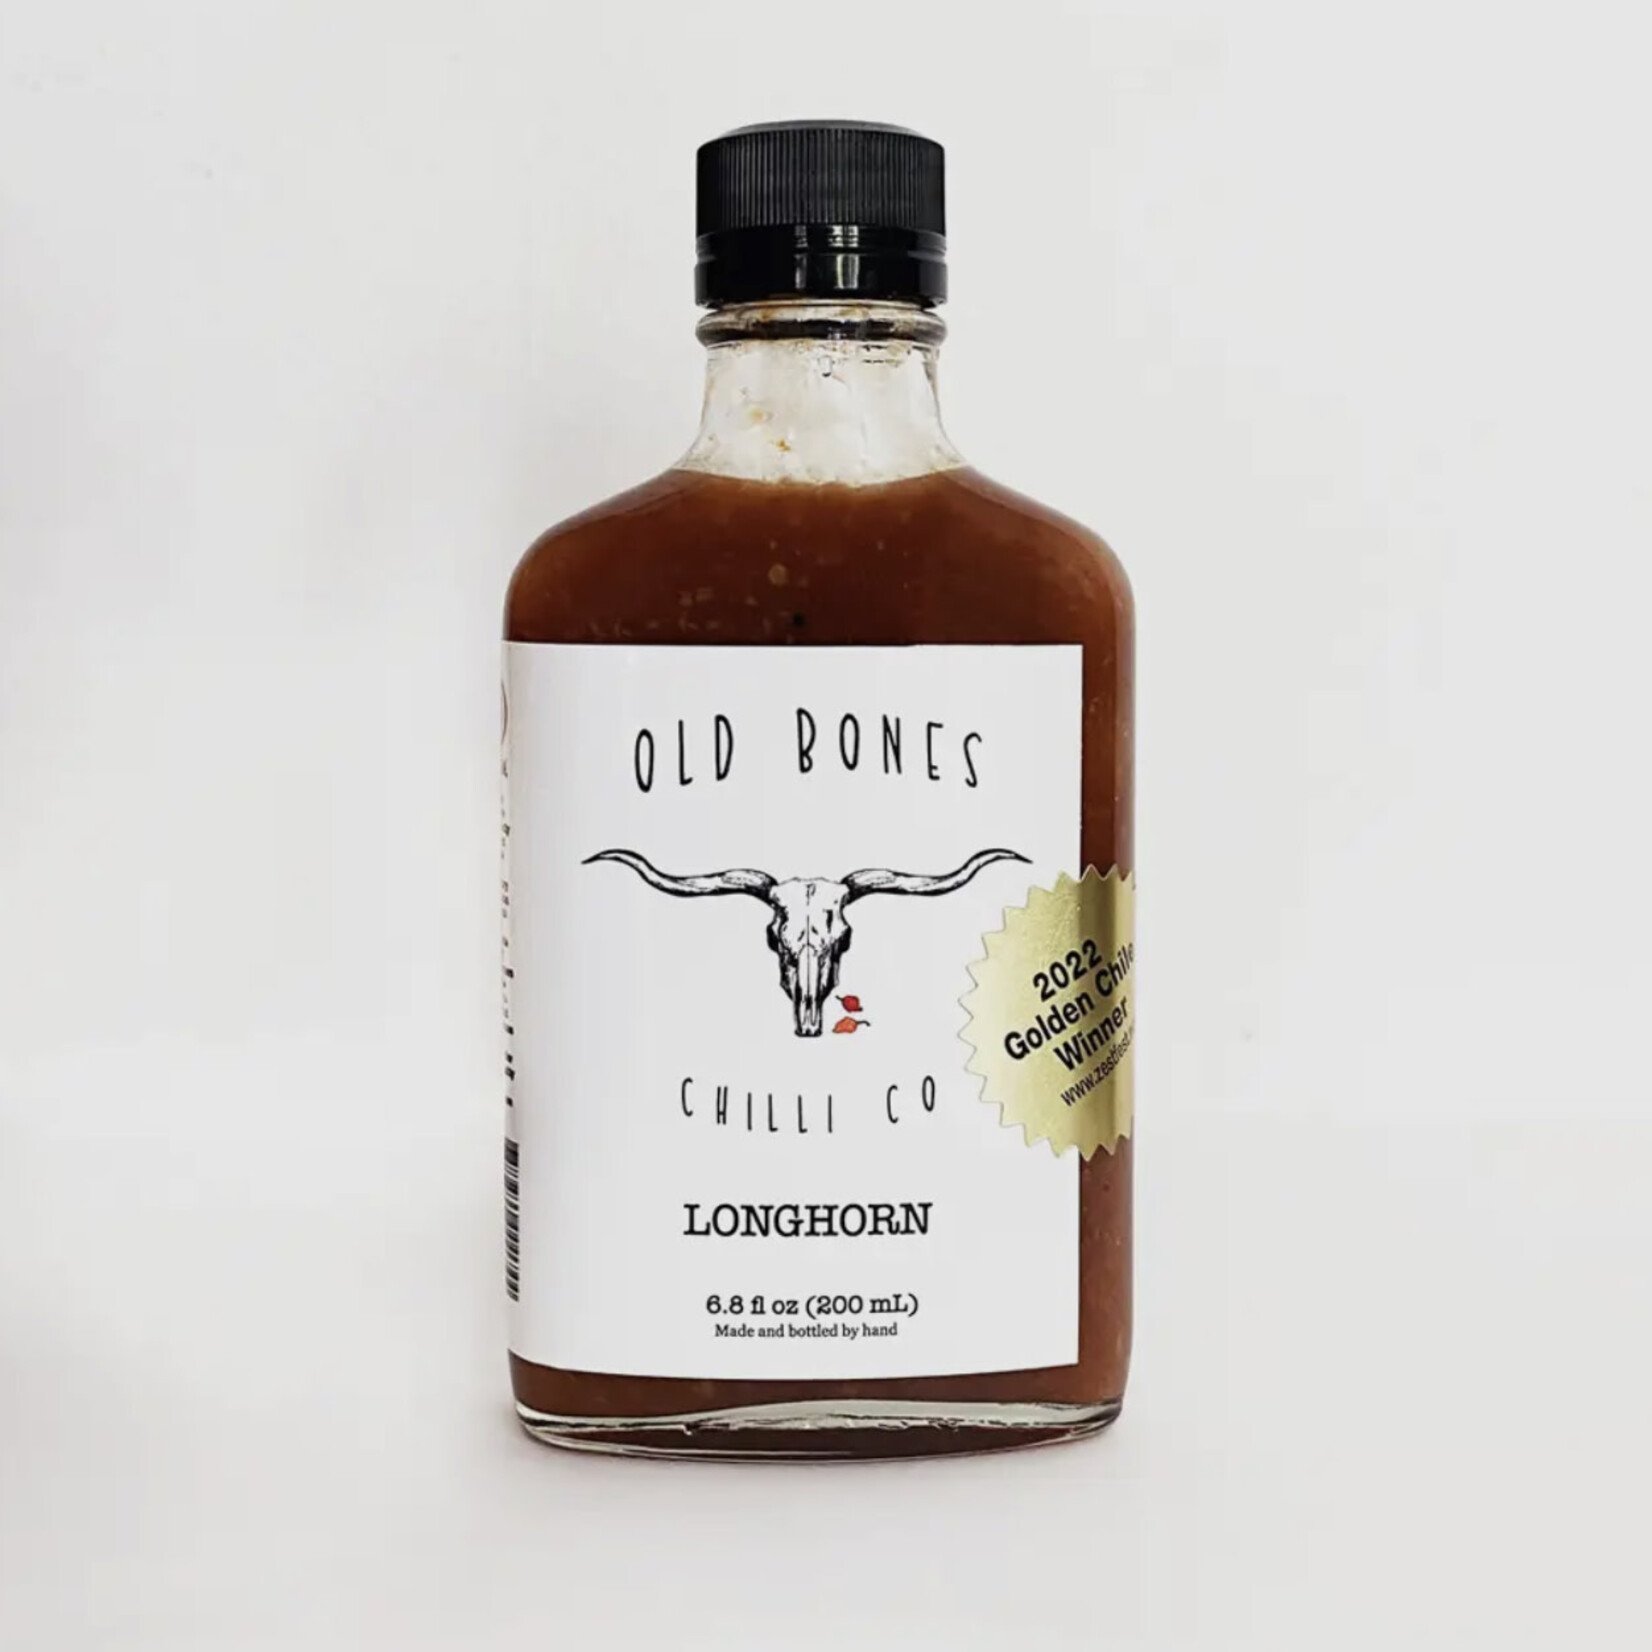 Old Bones Chilli Co. Hot Sauce - Longhorn